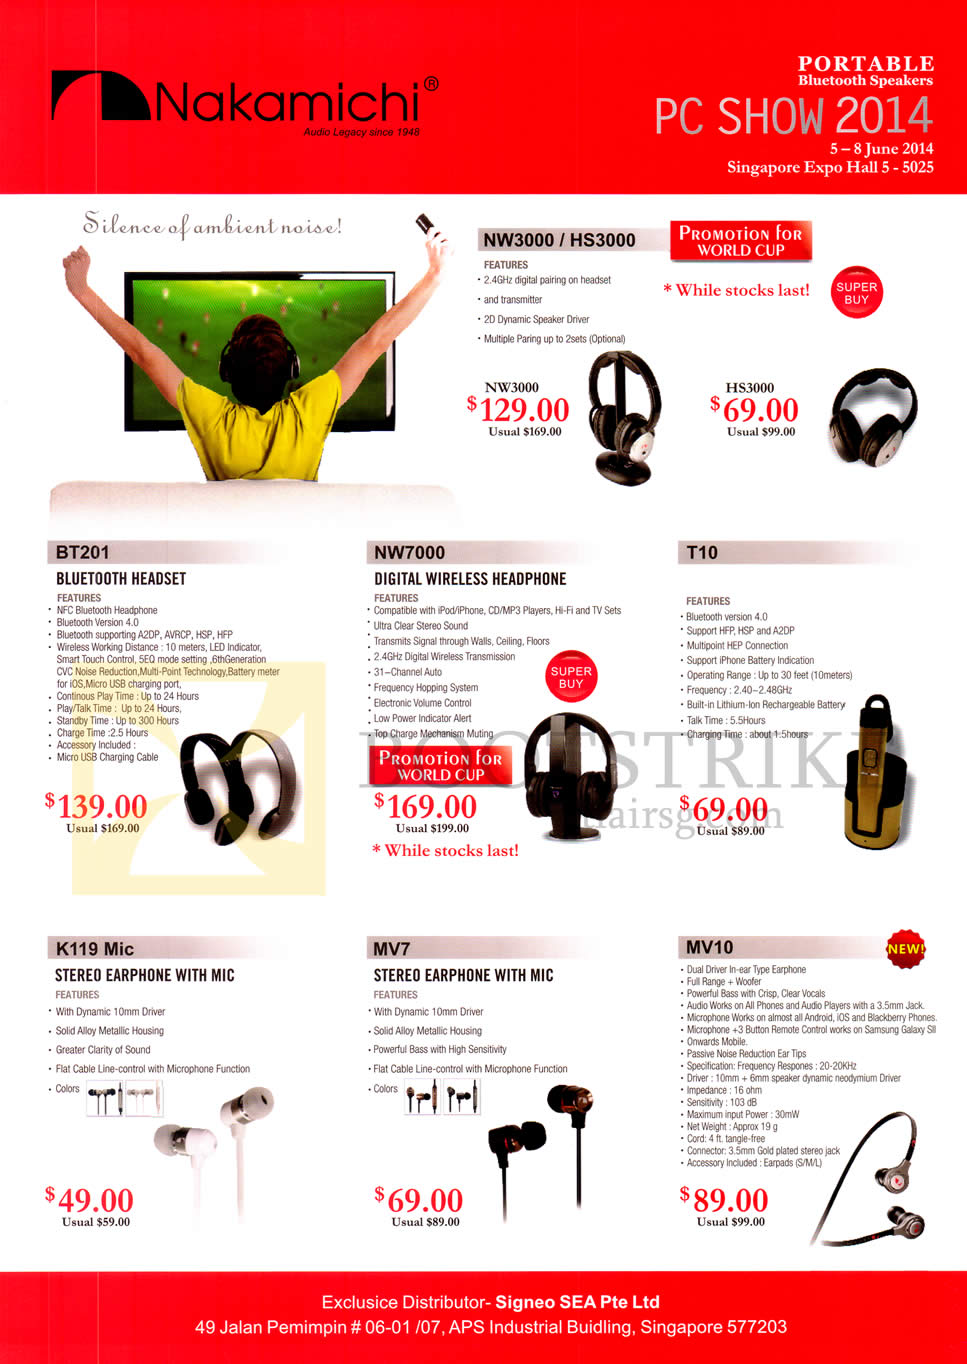 PC SHOW 2014 price list image brochure of Sprint-Cass Nakamichi Headphones, Earphones, BT201, NW7000, T10, K119Mic, MV7, MV10, NW3000, HS3000